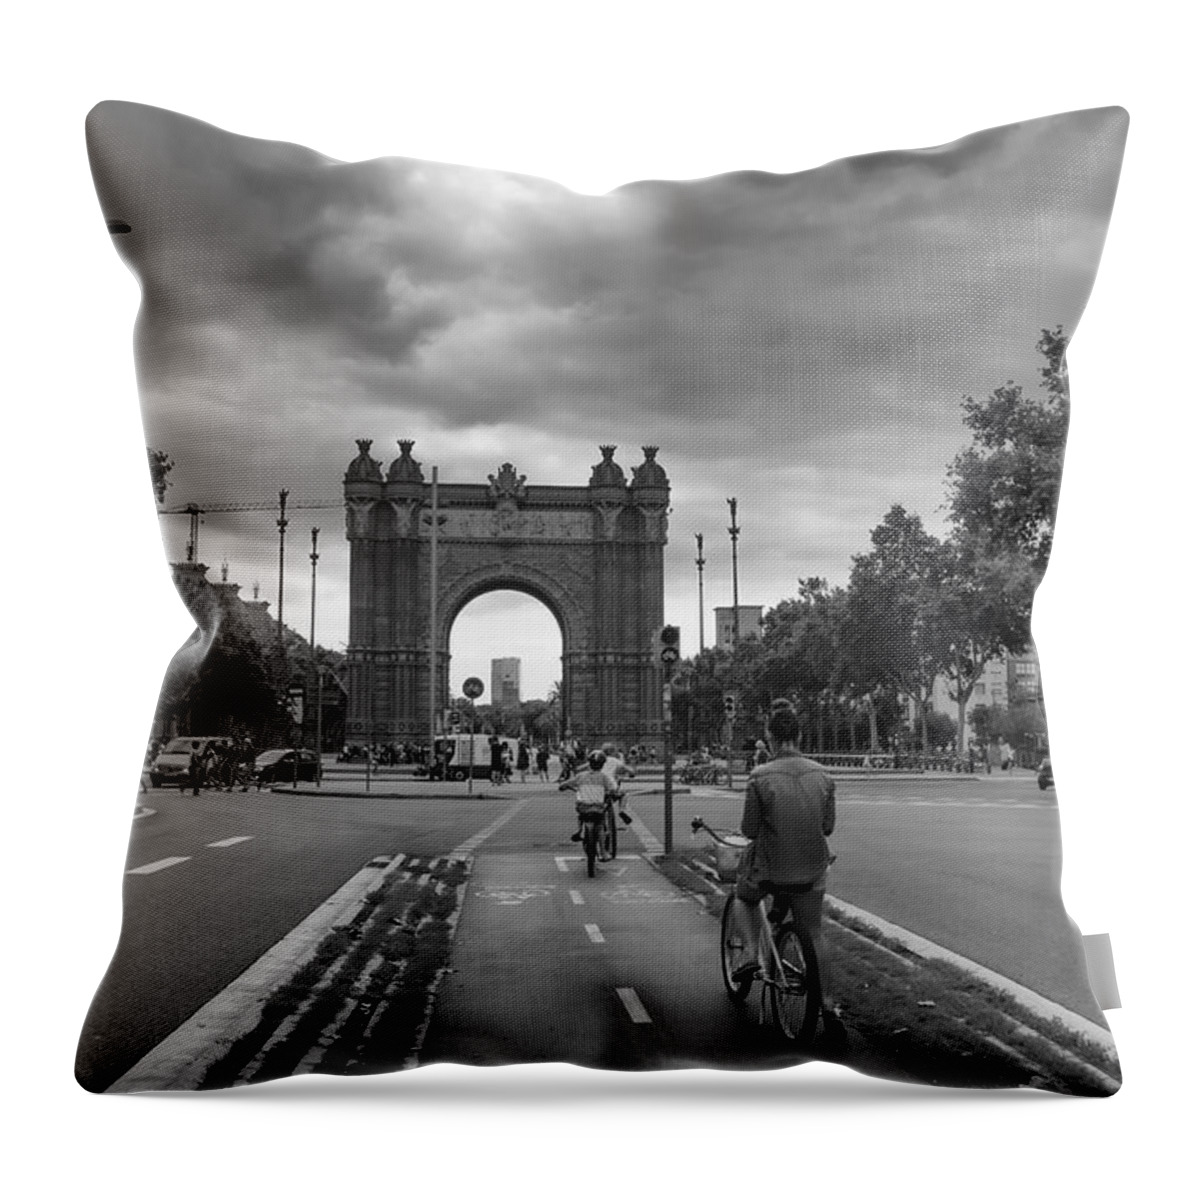 Barcelona Throw Pillow featuring the photograph Barcelona Arc De Triomf Street Scene by Georgia Clare